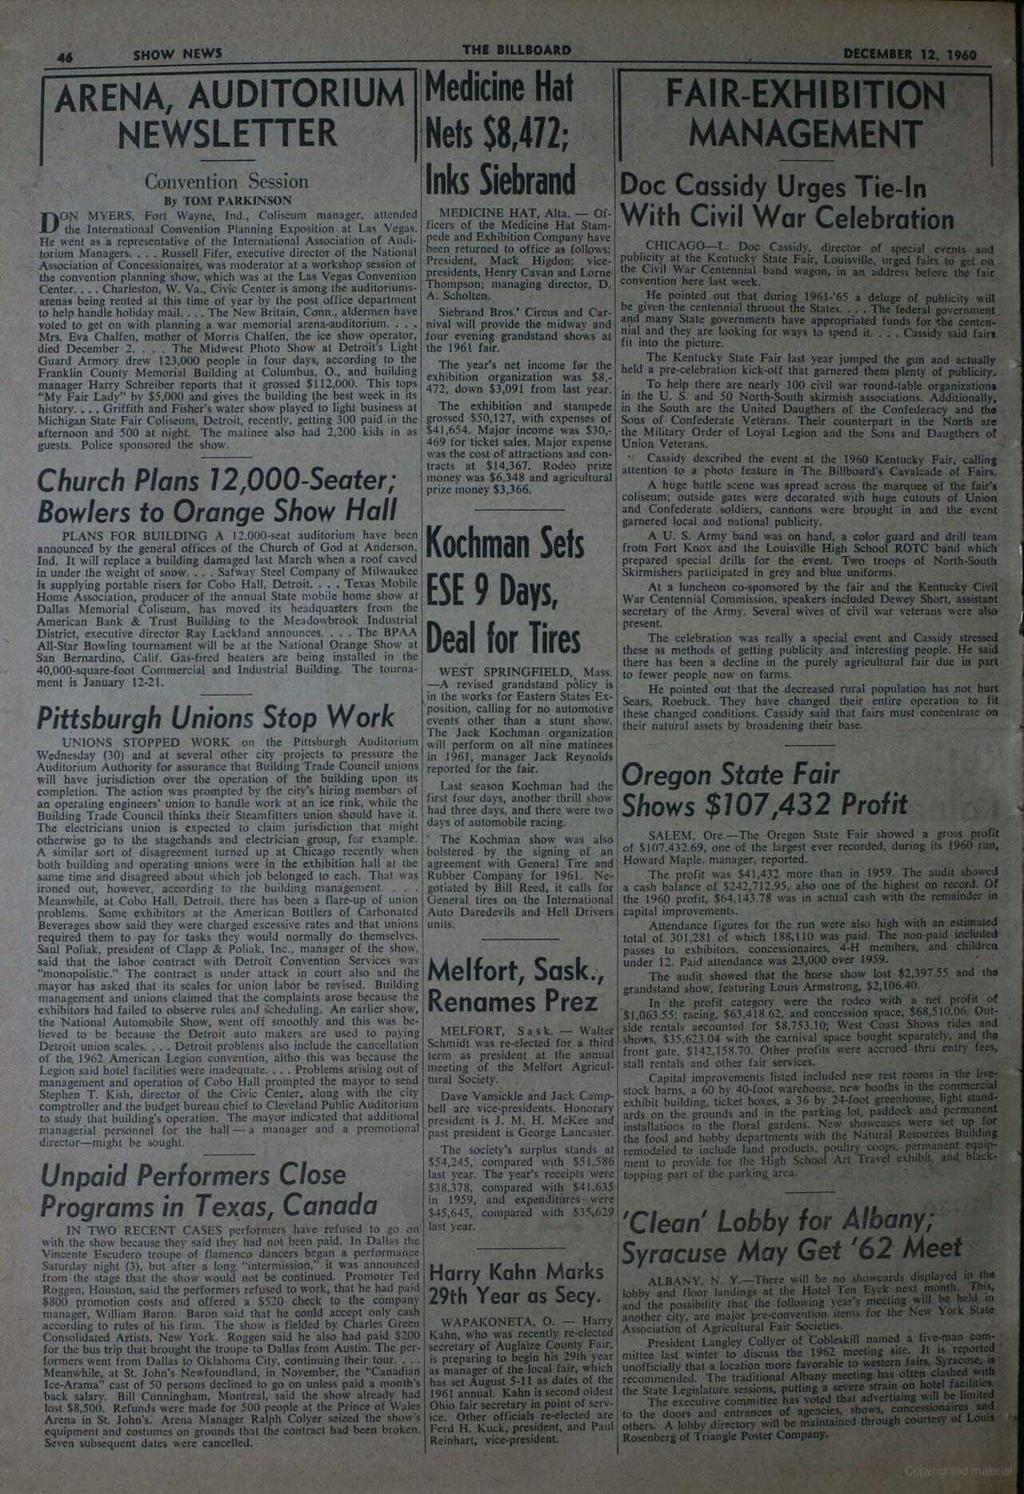 46 SHOW NEWS IARENA, AUDITORIUM NEWSLETTER THE BILLBOARD Medicine Hat Nets $8,411; DECEMBER 12. 1960 FAIR -EXHIBITION MANAGEMENT Convention Session By TOM PARKINSON DON MYERS. Fort Wayne, Ind.